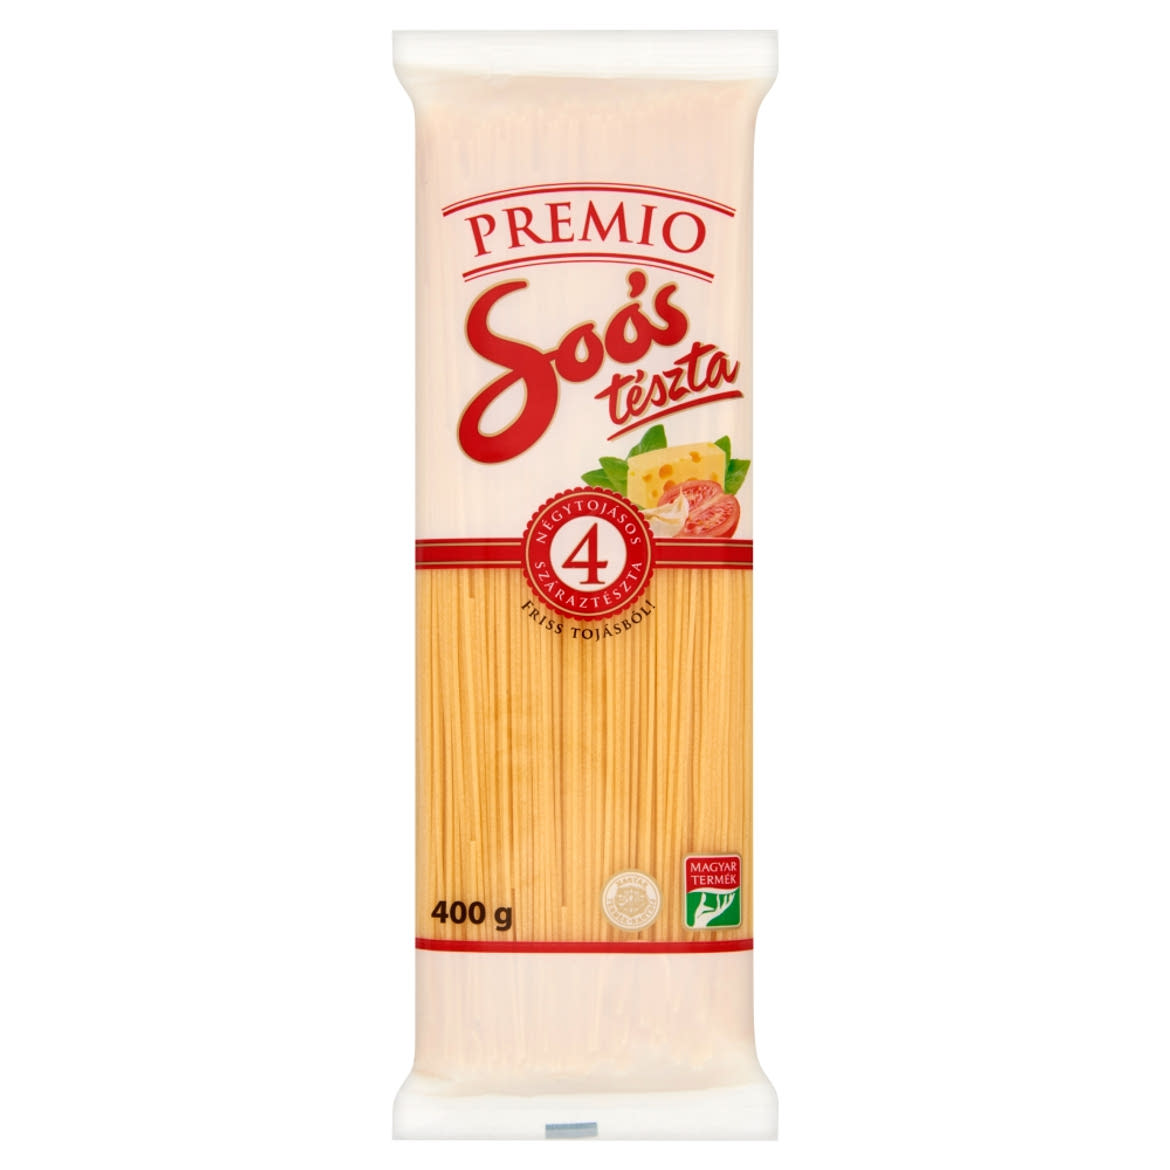 Soós Premio spagetti 4 tojásos száraztészta